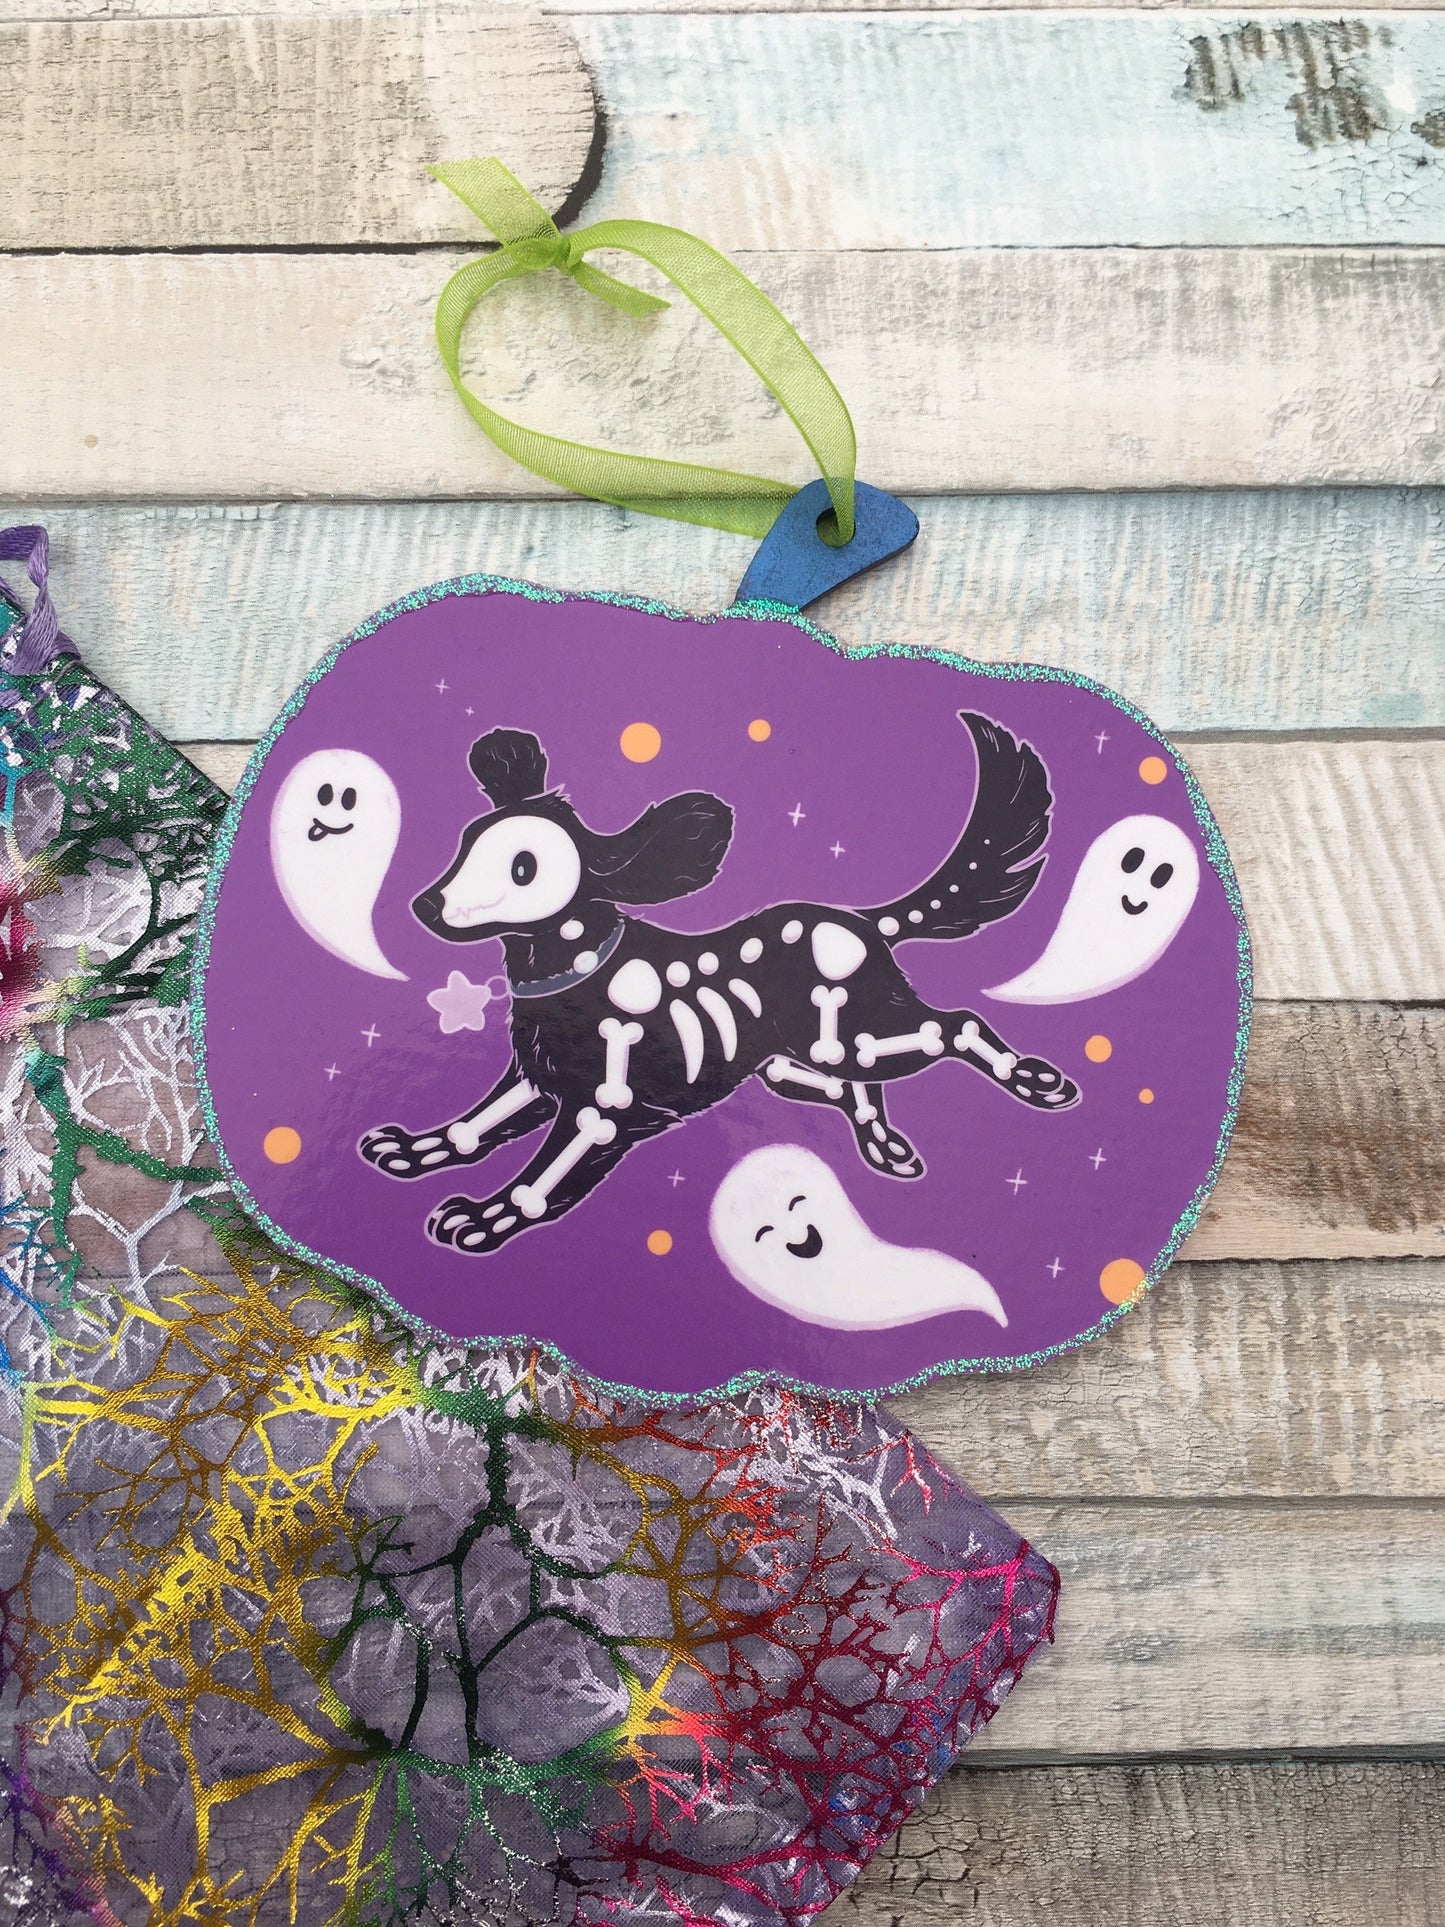 Shadow The Dog - Spooky Gang Halloween Hanging Decoration - Wooden Pumpkin Hanging Ornament - Handmade Halloween Dog Ornament